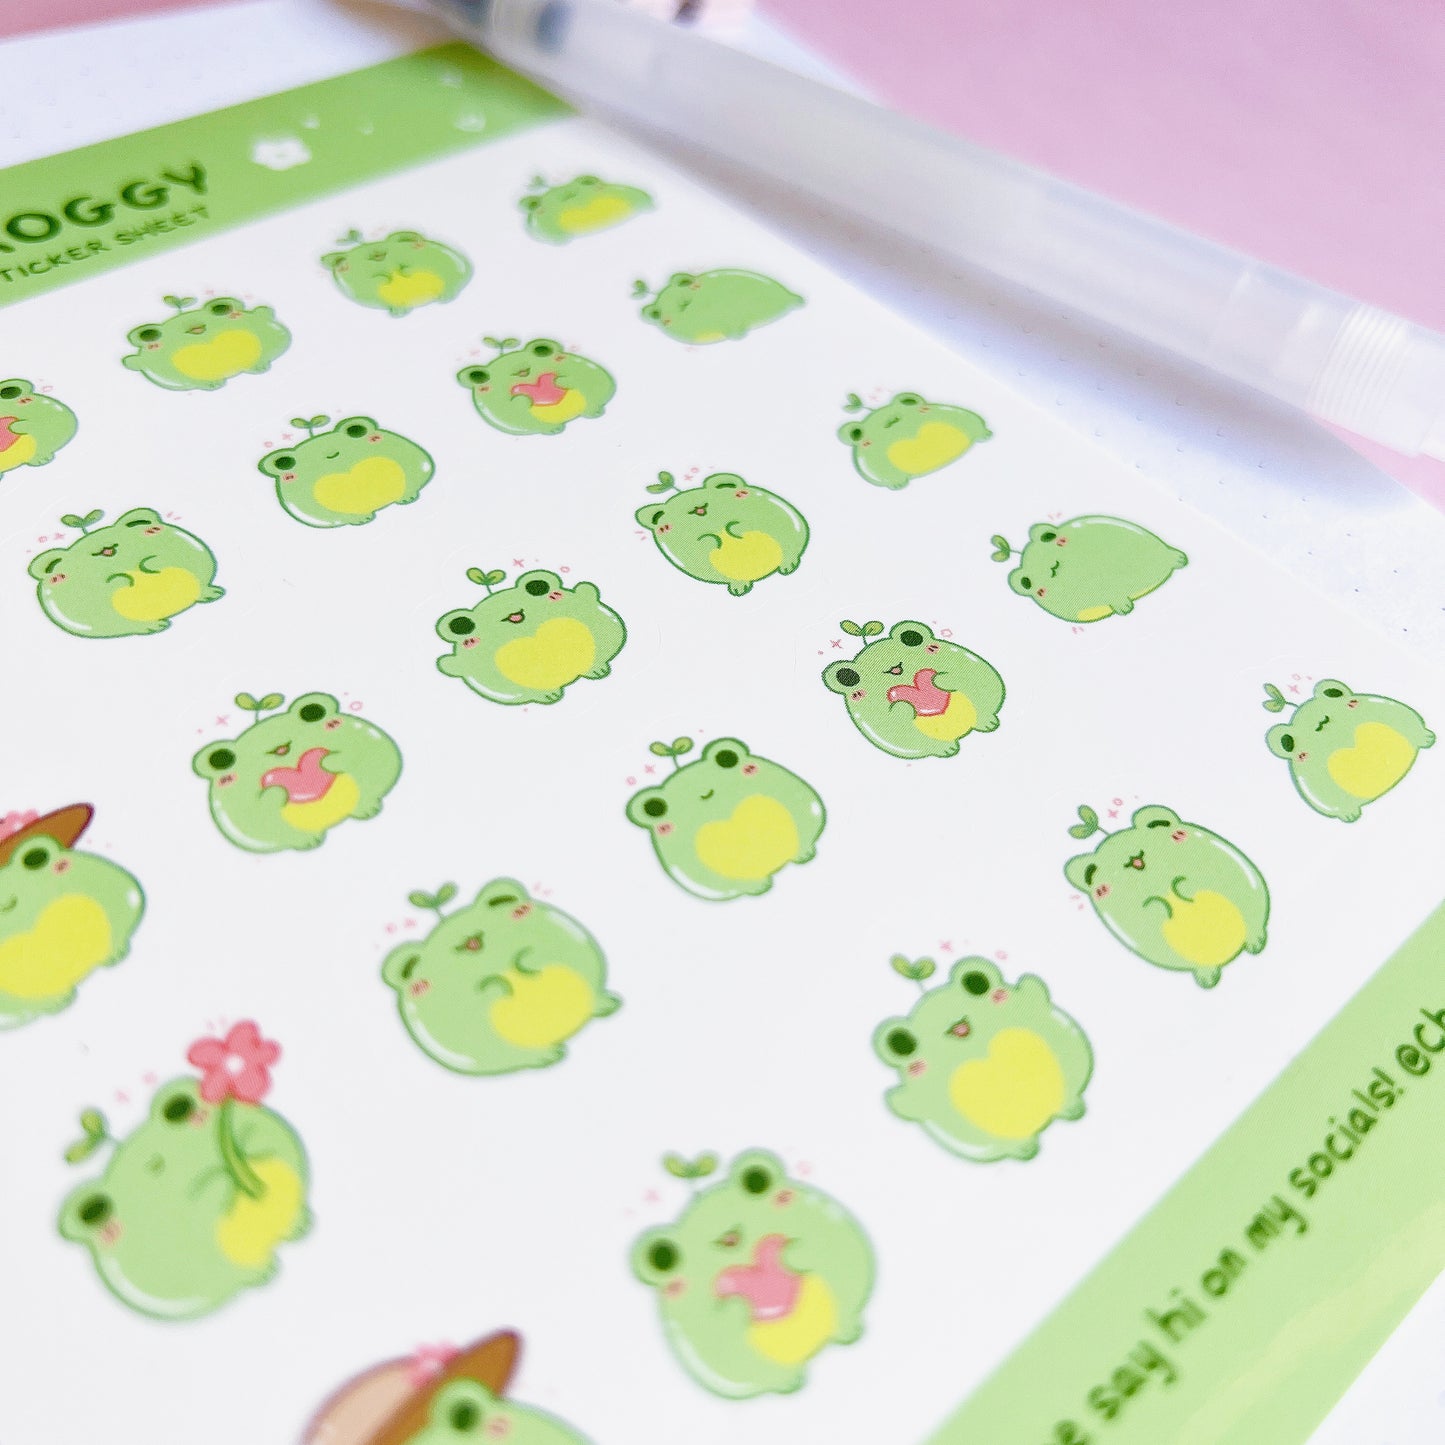 Big Froggy Sticker Sheet